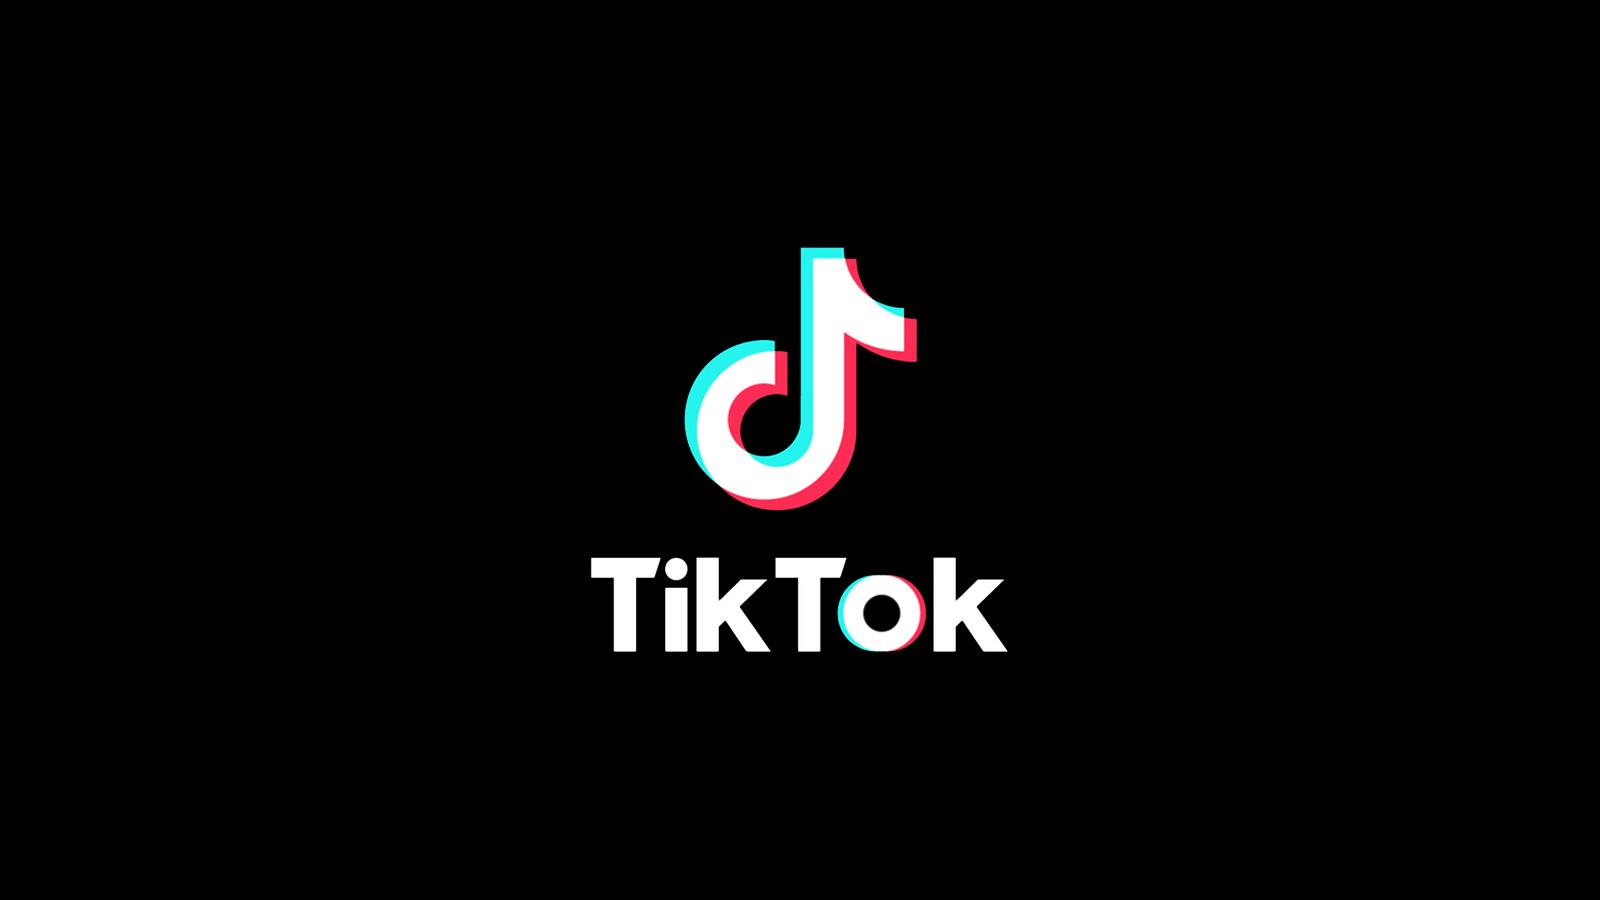 TikTok logo on black screen